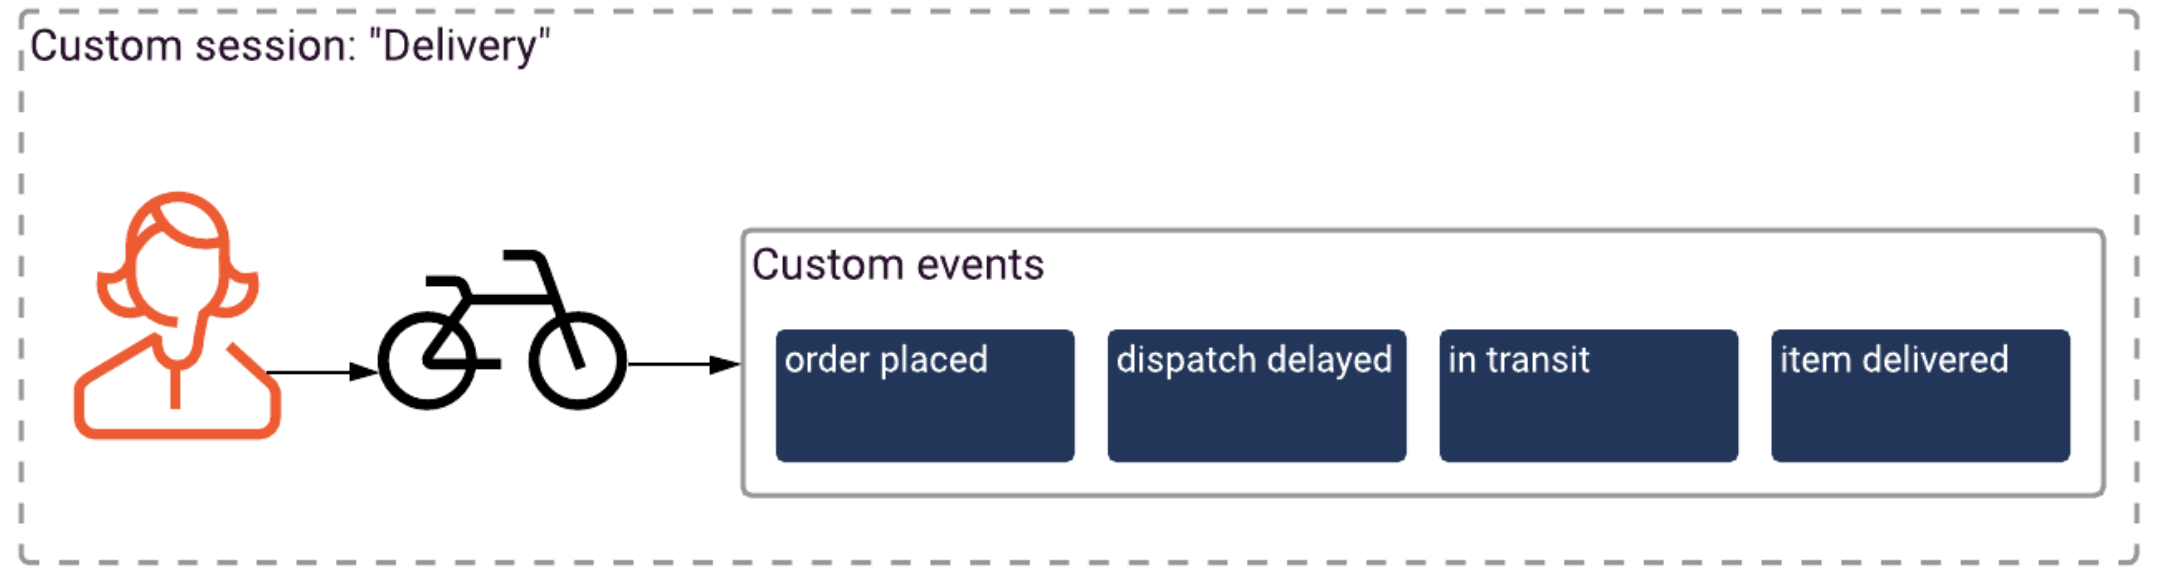 Custom events bike delivery scenario